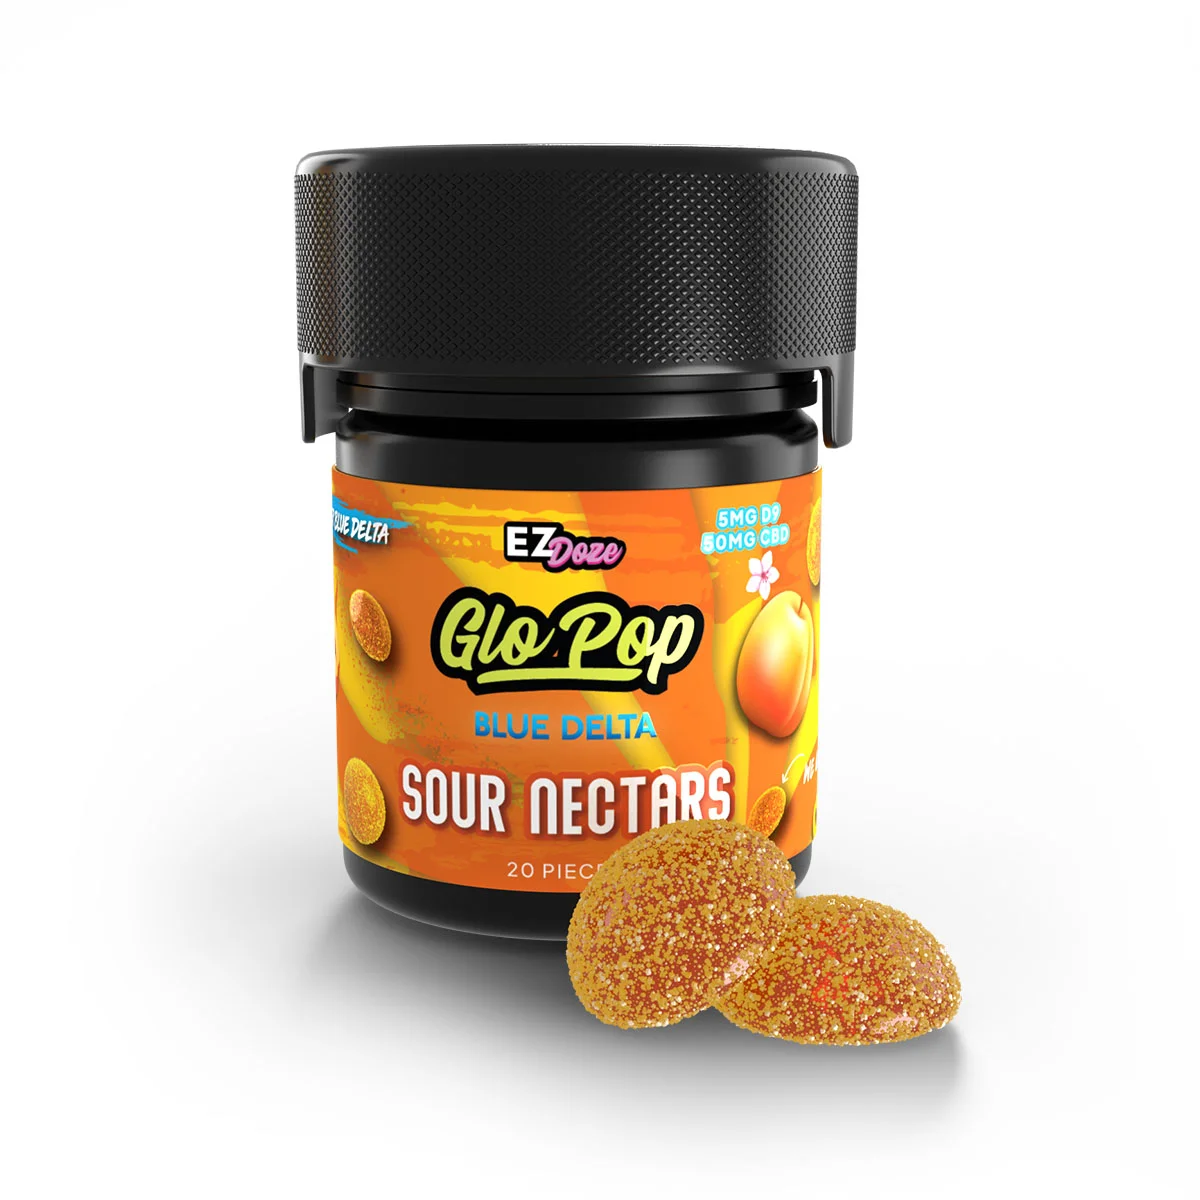 glopop-ez-dose-sour-nectars-20pc-jar.jpg